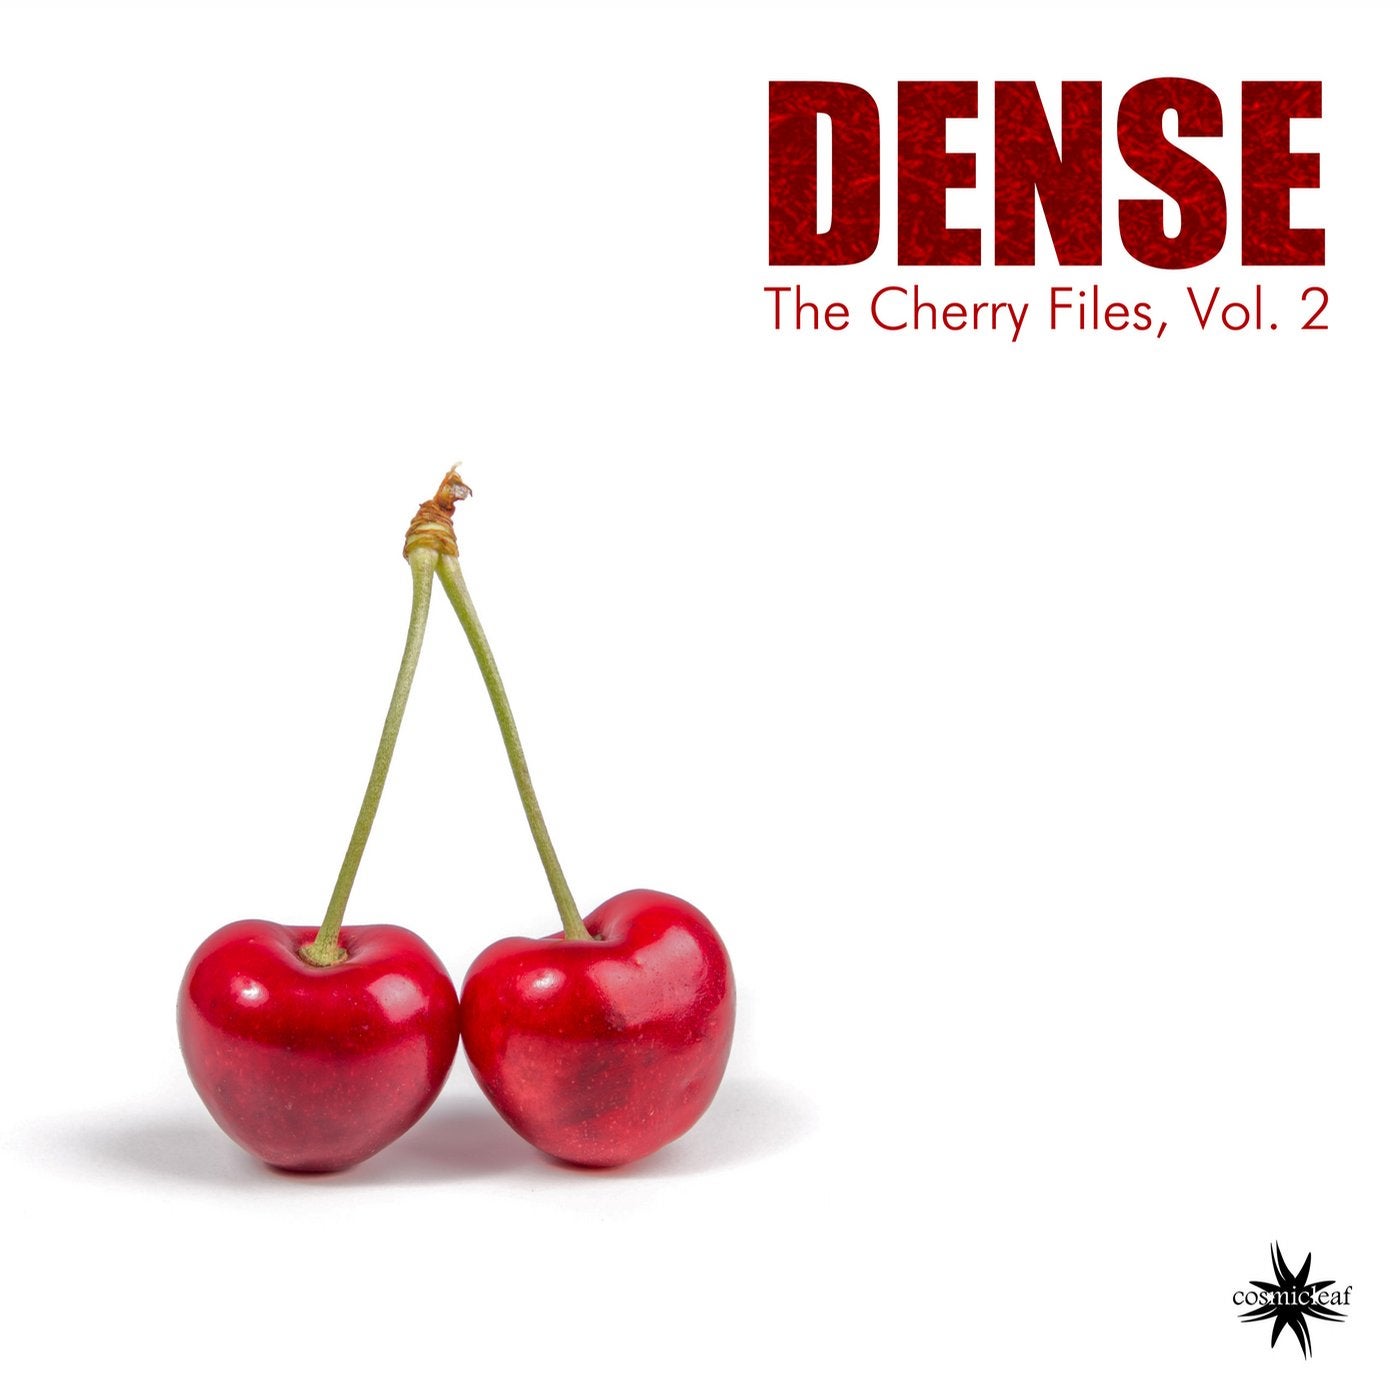 The Cherry Files, Vol. 2